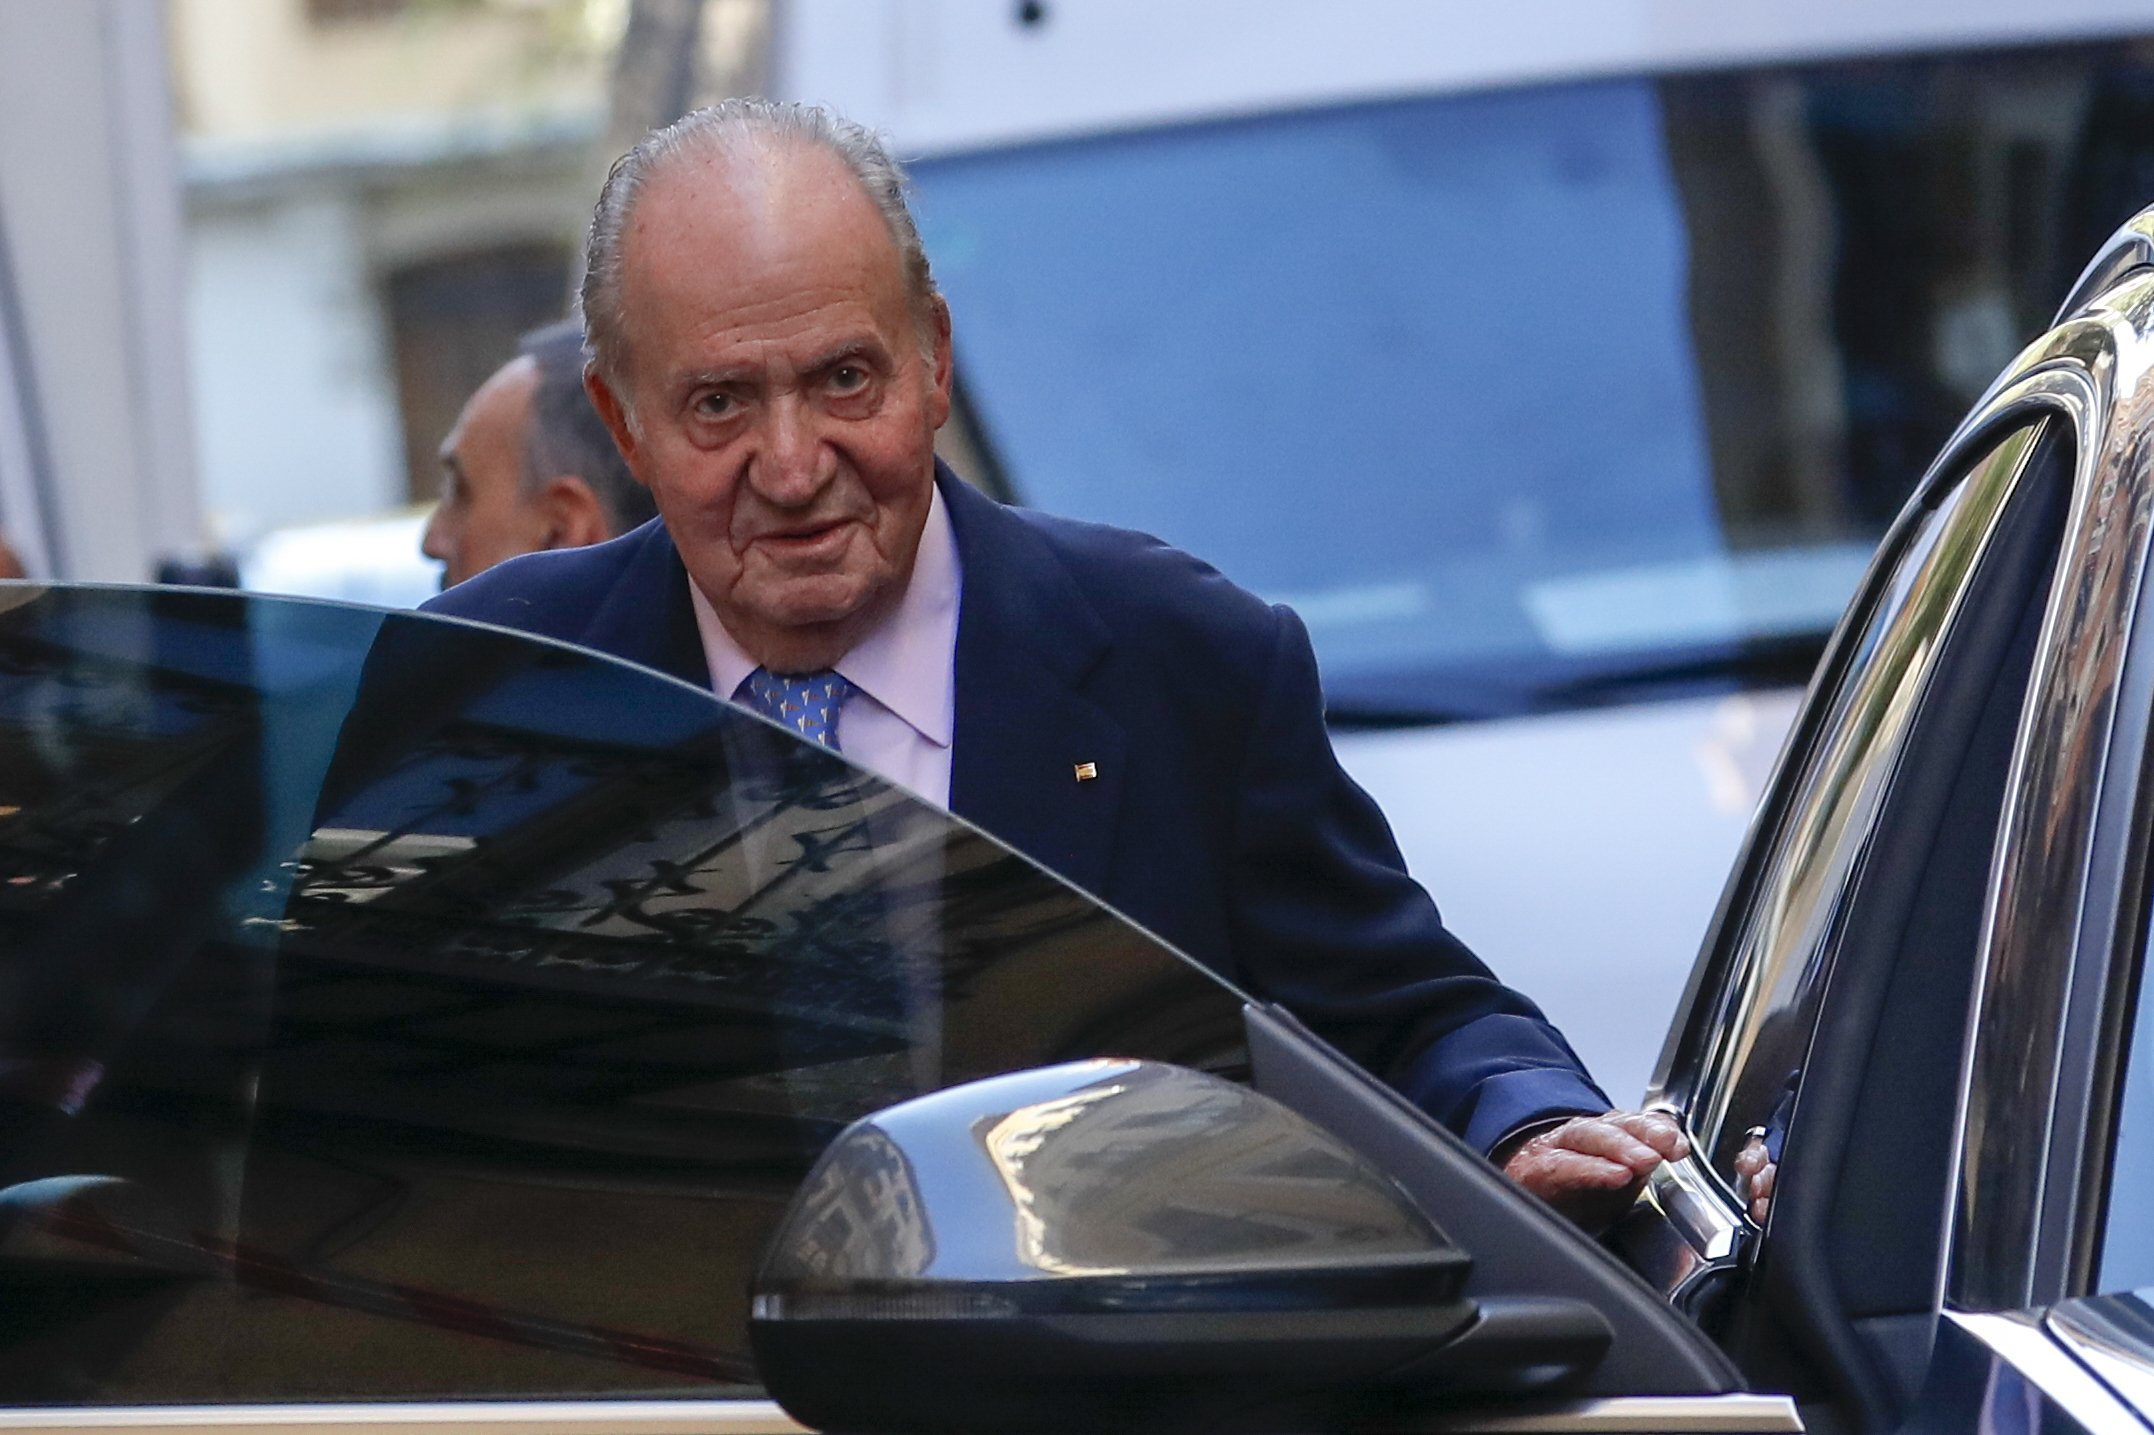 Spain's Juan Carlos I is the king who "self-destructed", says German public radio